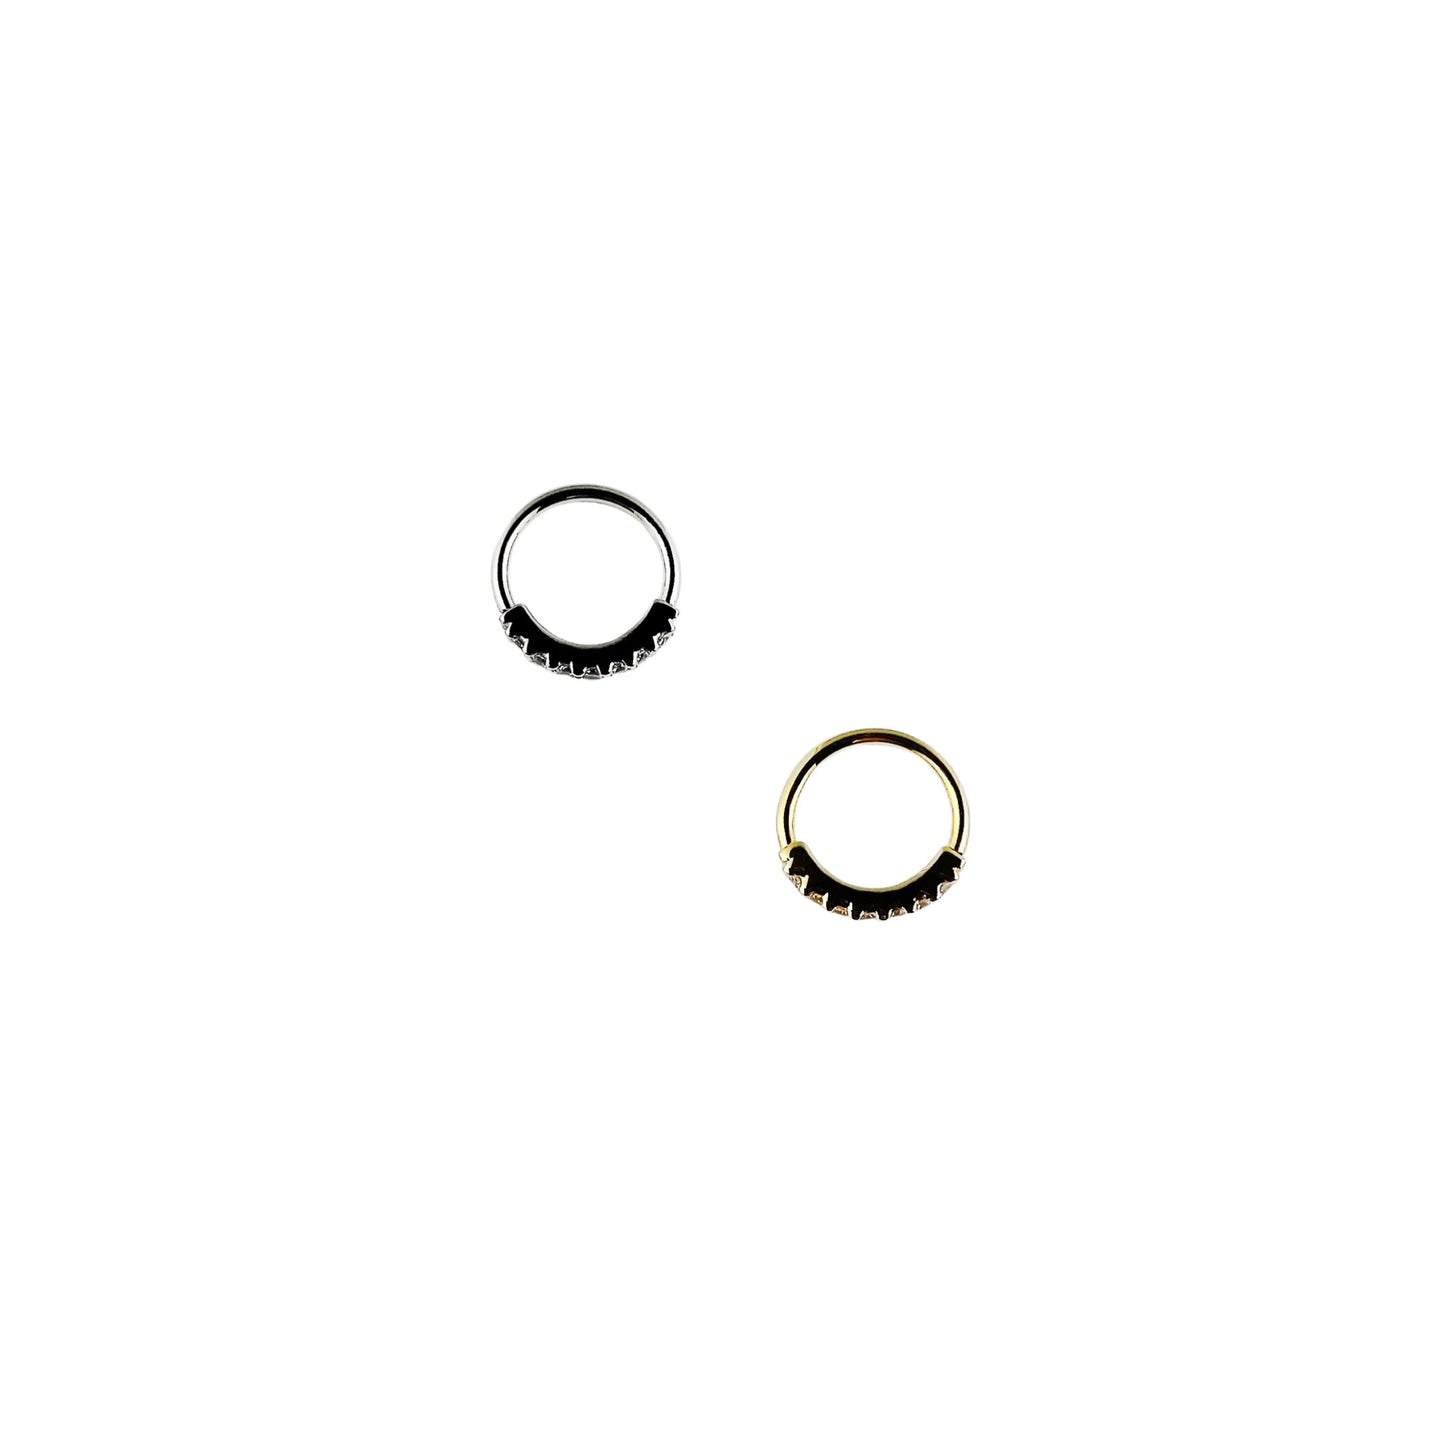 Outward-Facing FIxed 7-Gem Seam Ring